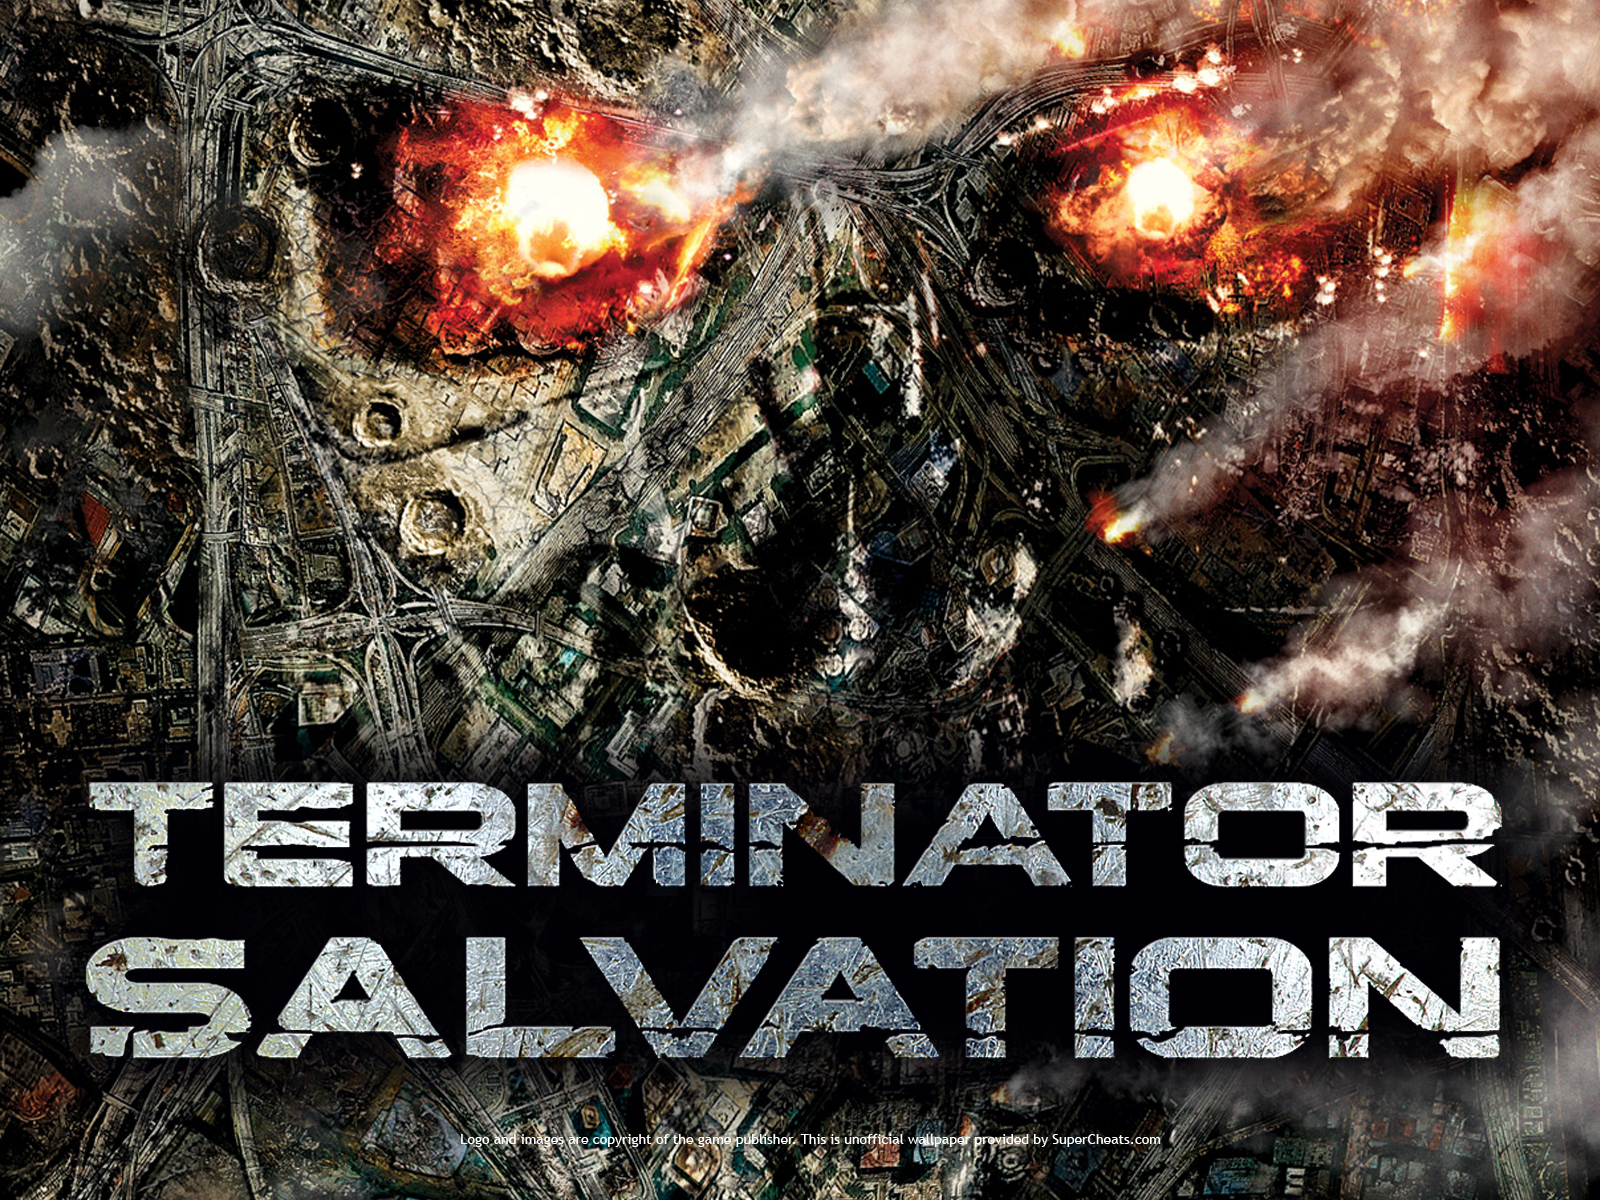 Salvation gaming. Terminator Salvation (игра). Терминатор да придёт Спаситель игра. Терминатор Salvation. Terminator ps3.